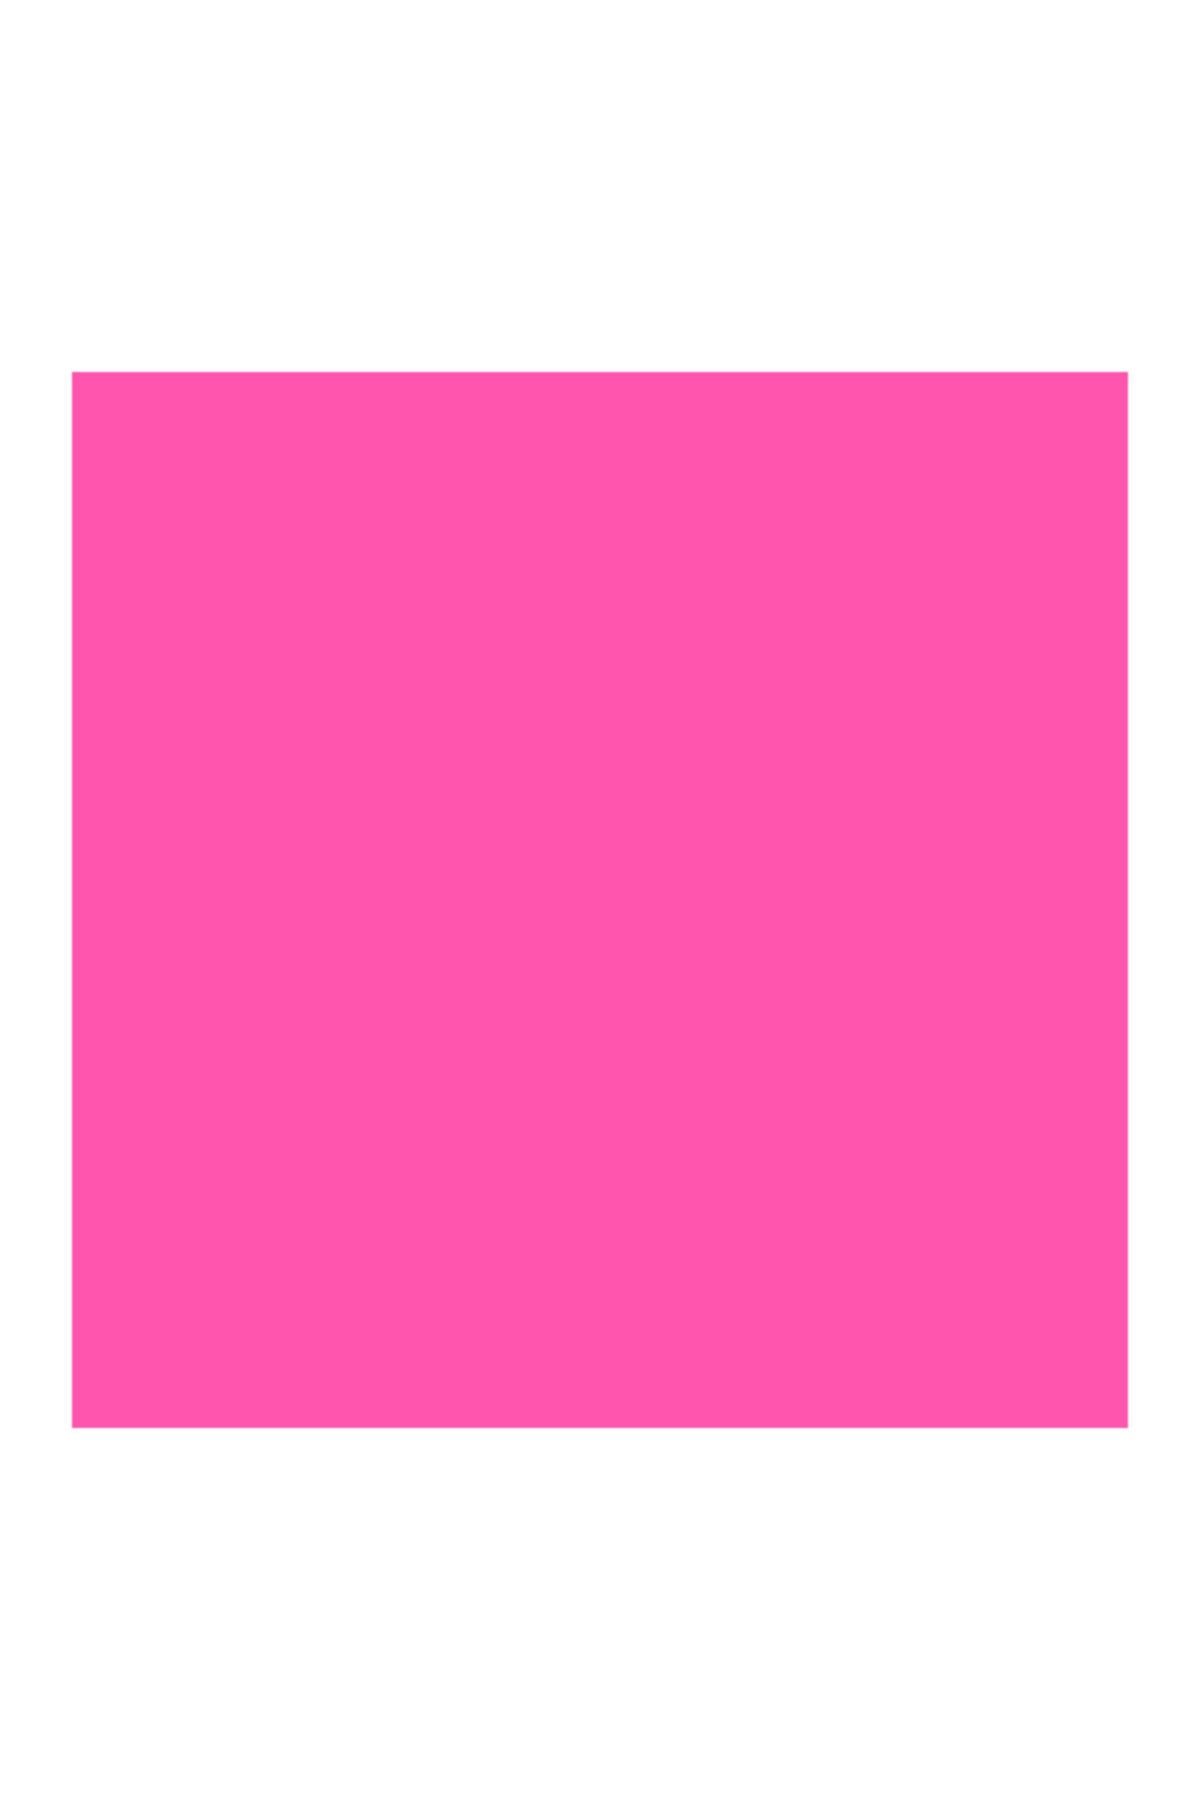 Ponart Touch Twin Rp6 Vivid Pink Marker Sh1110006